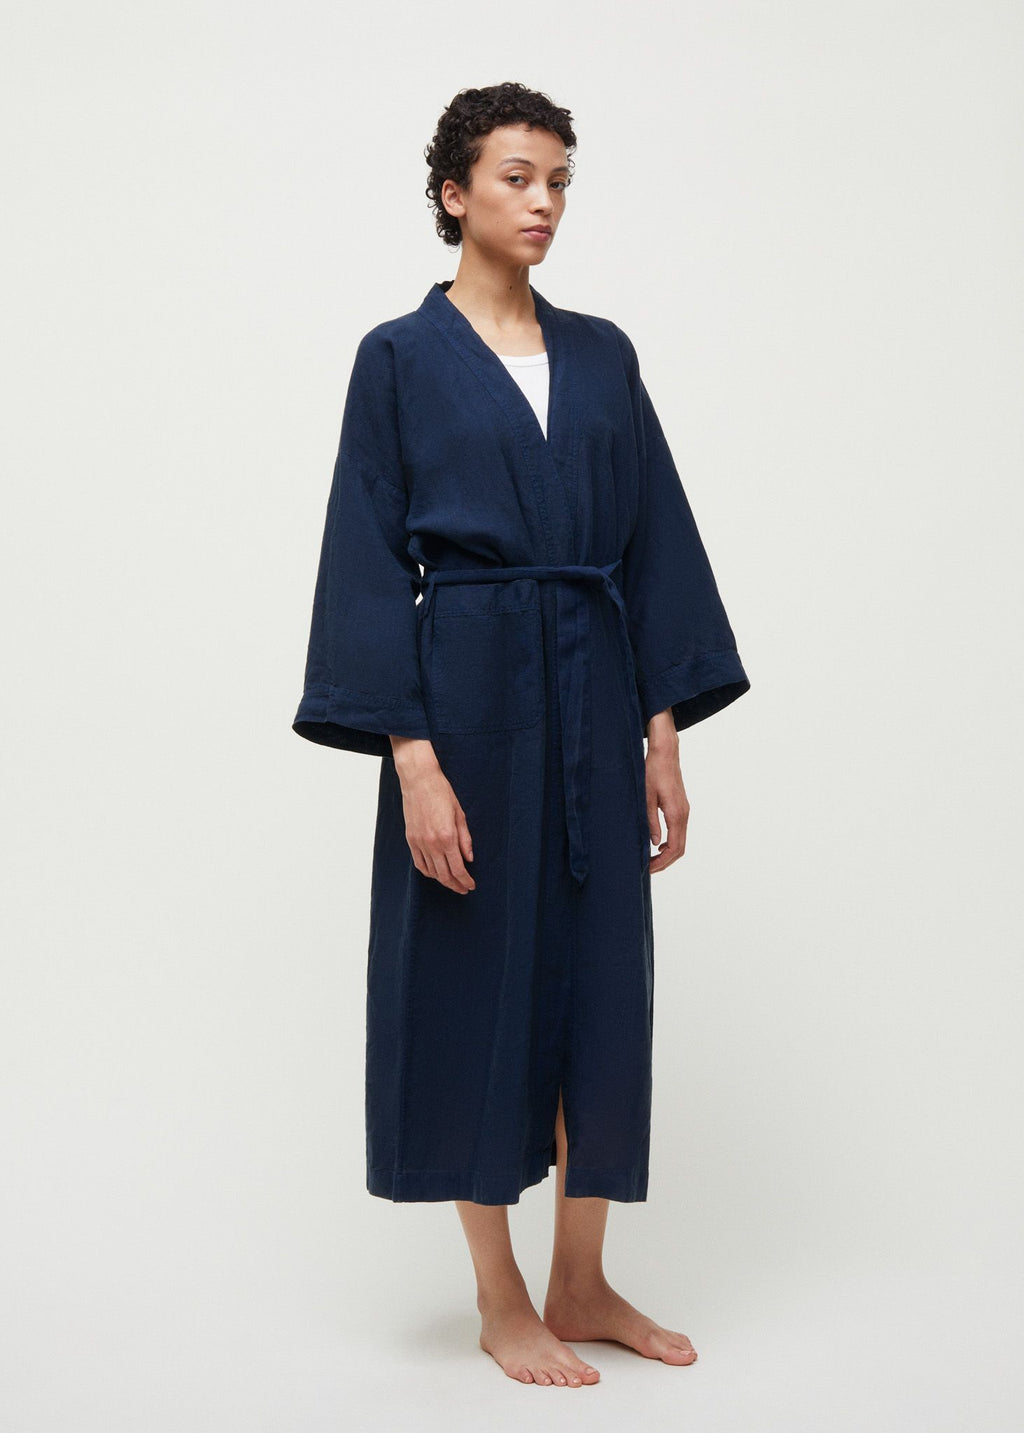 Kimono Linen / Navy